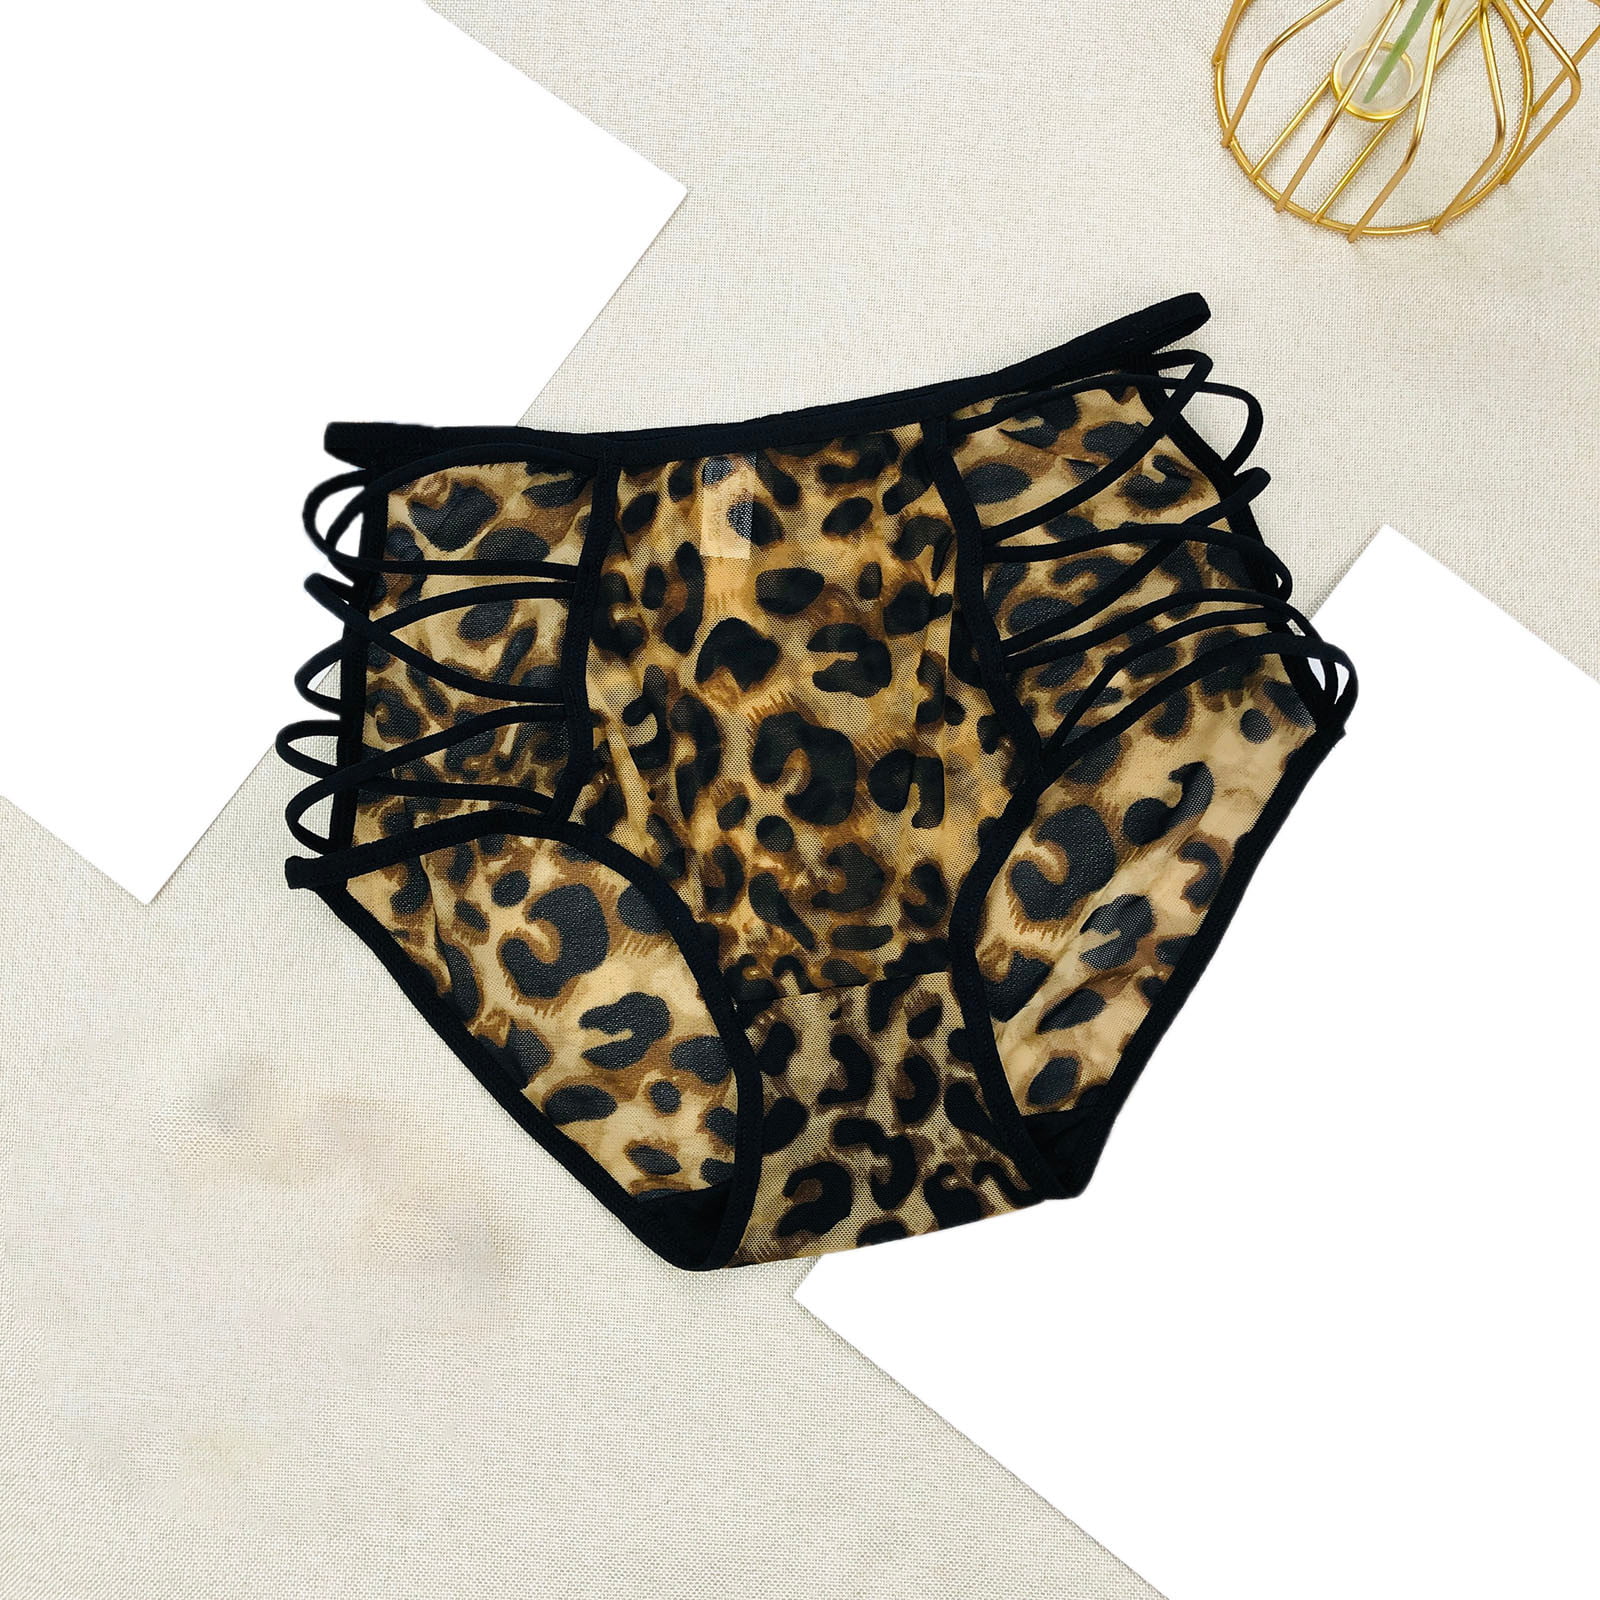 ZMHEGW Womens Panties Leopard Print Translucent Sheer Lace Tank